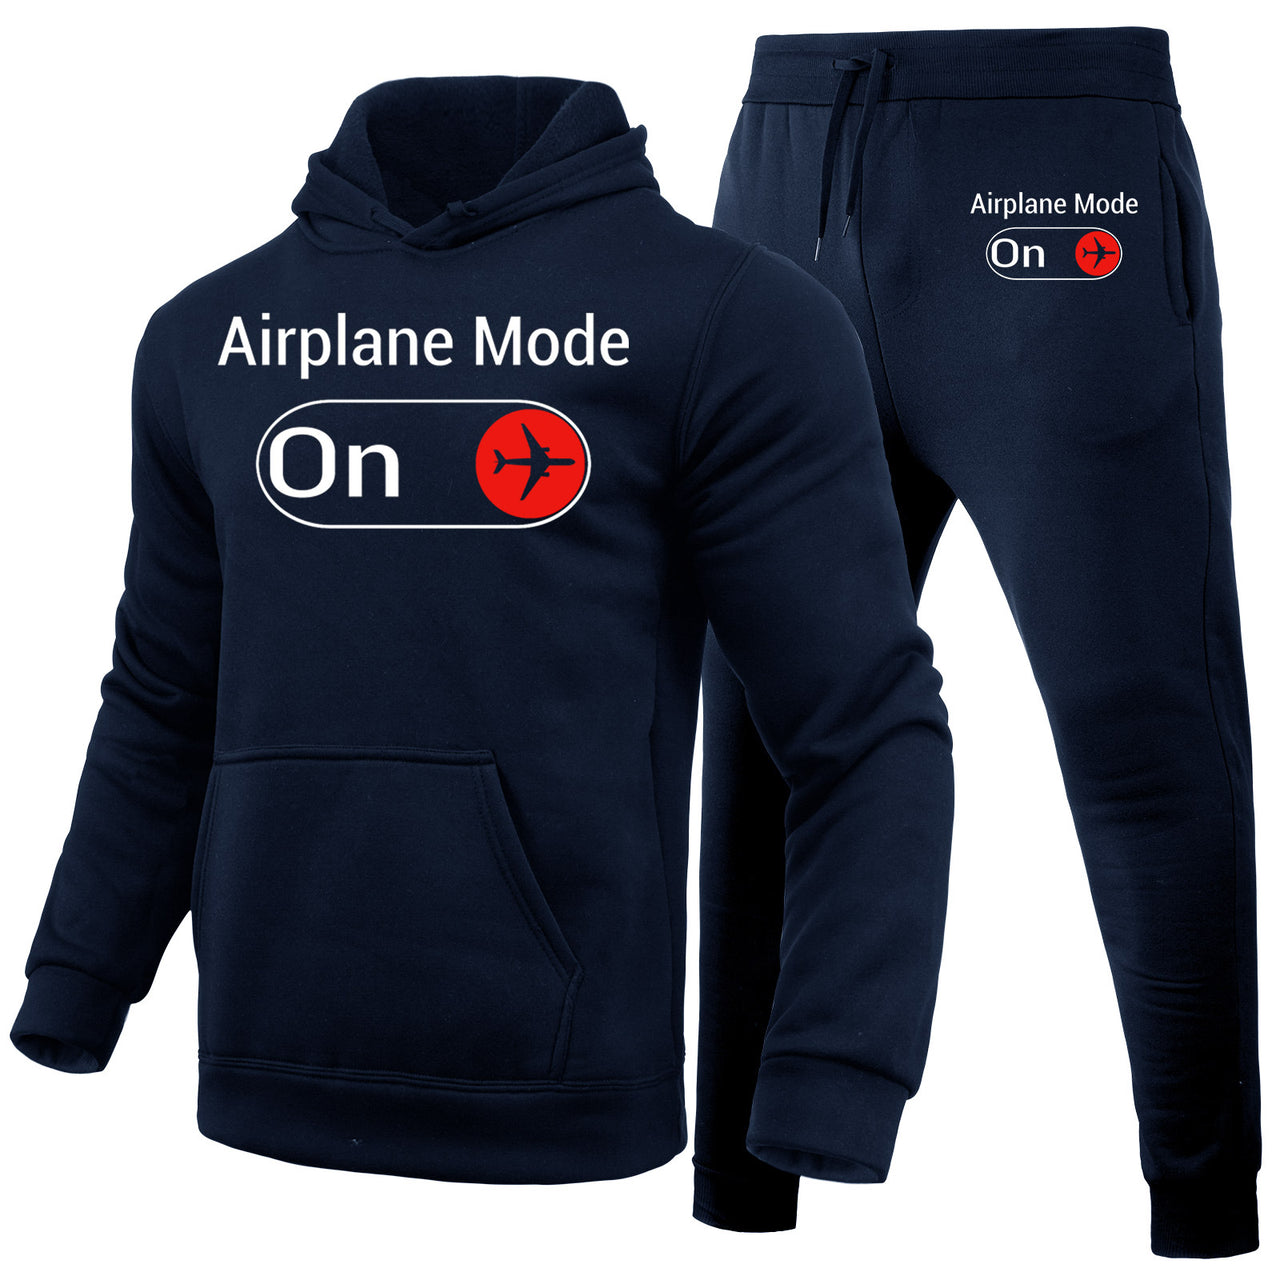 Airplane Mode On Designed Hoodies & Sweatpants Set